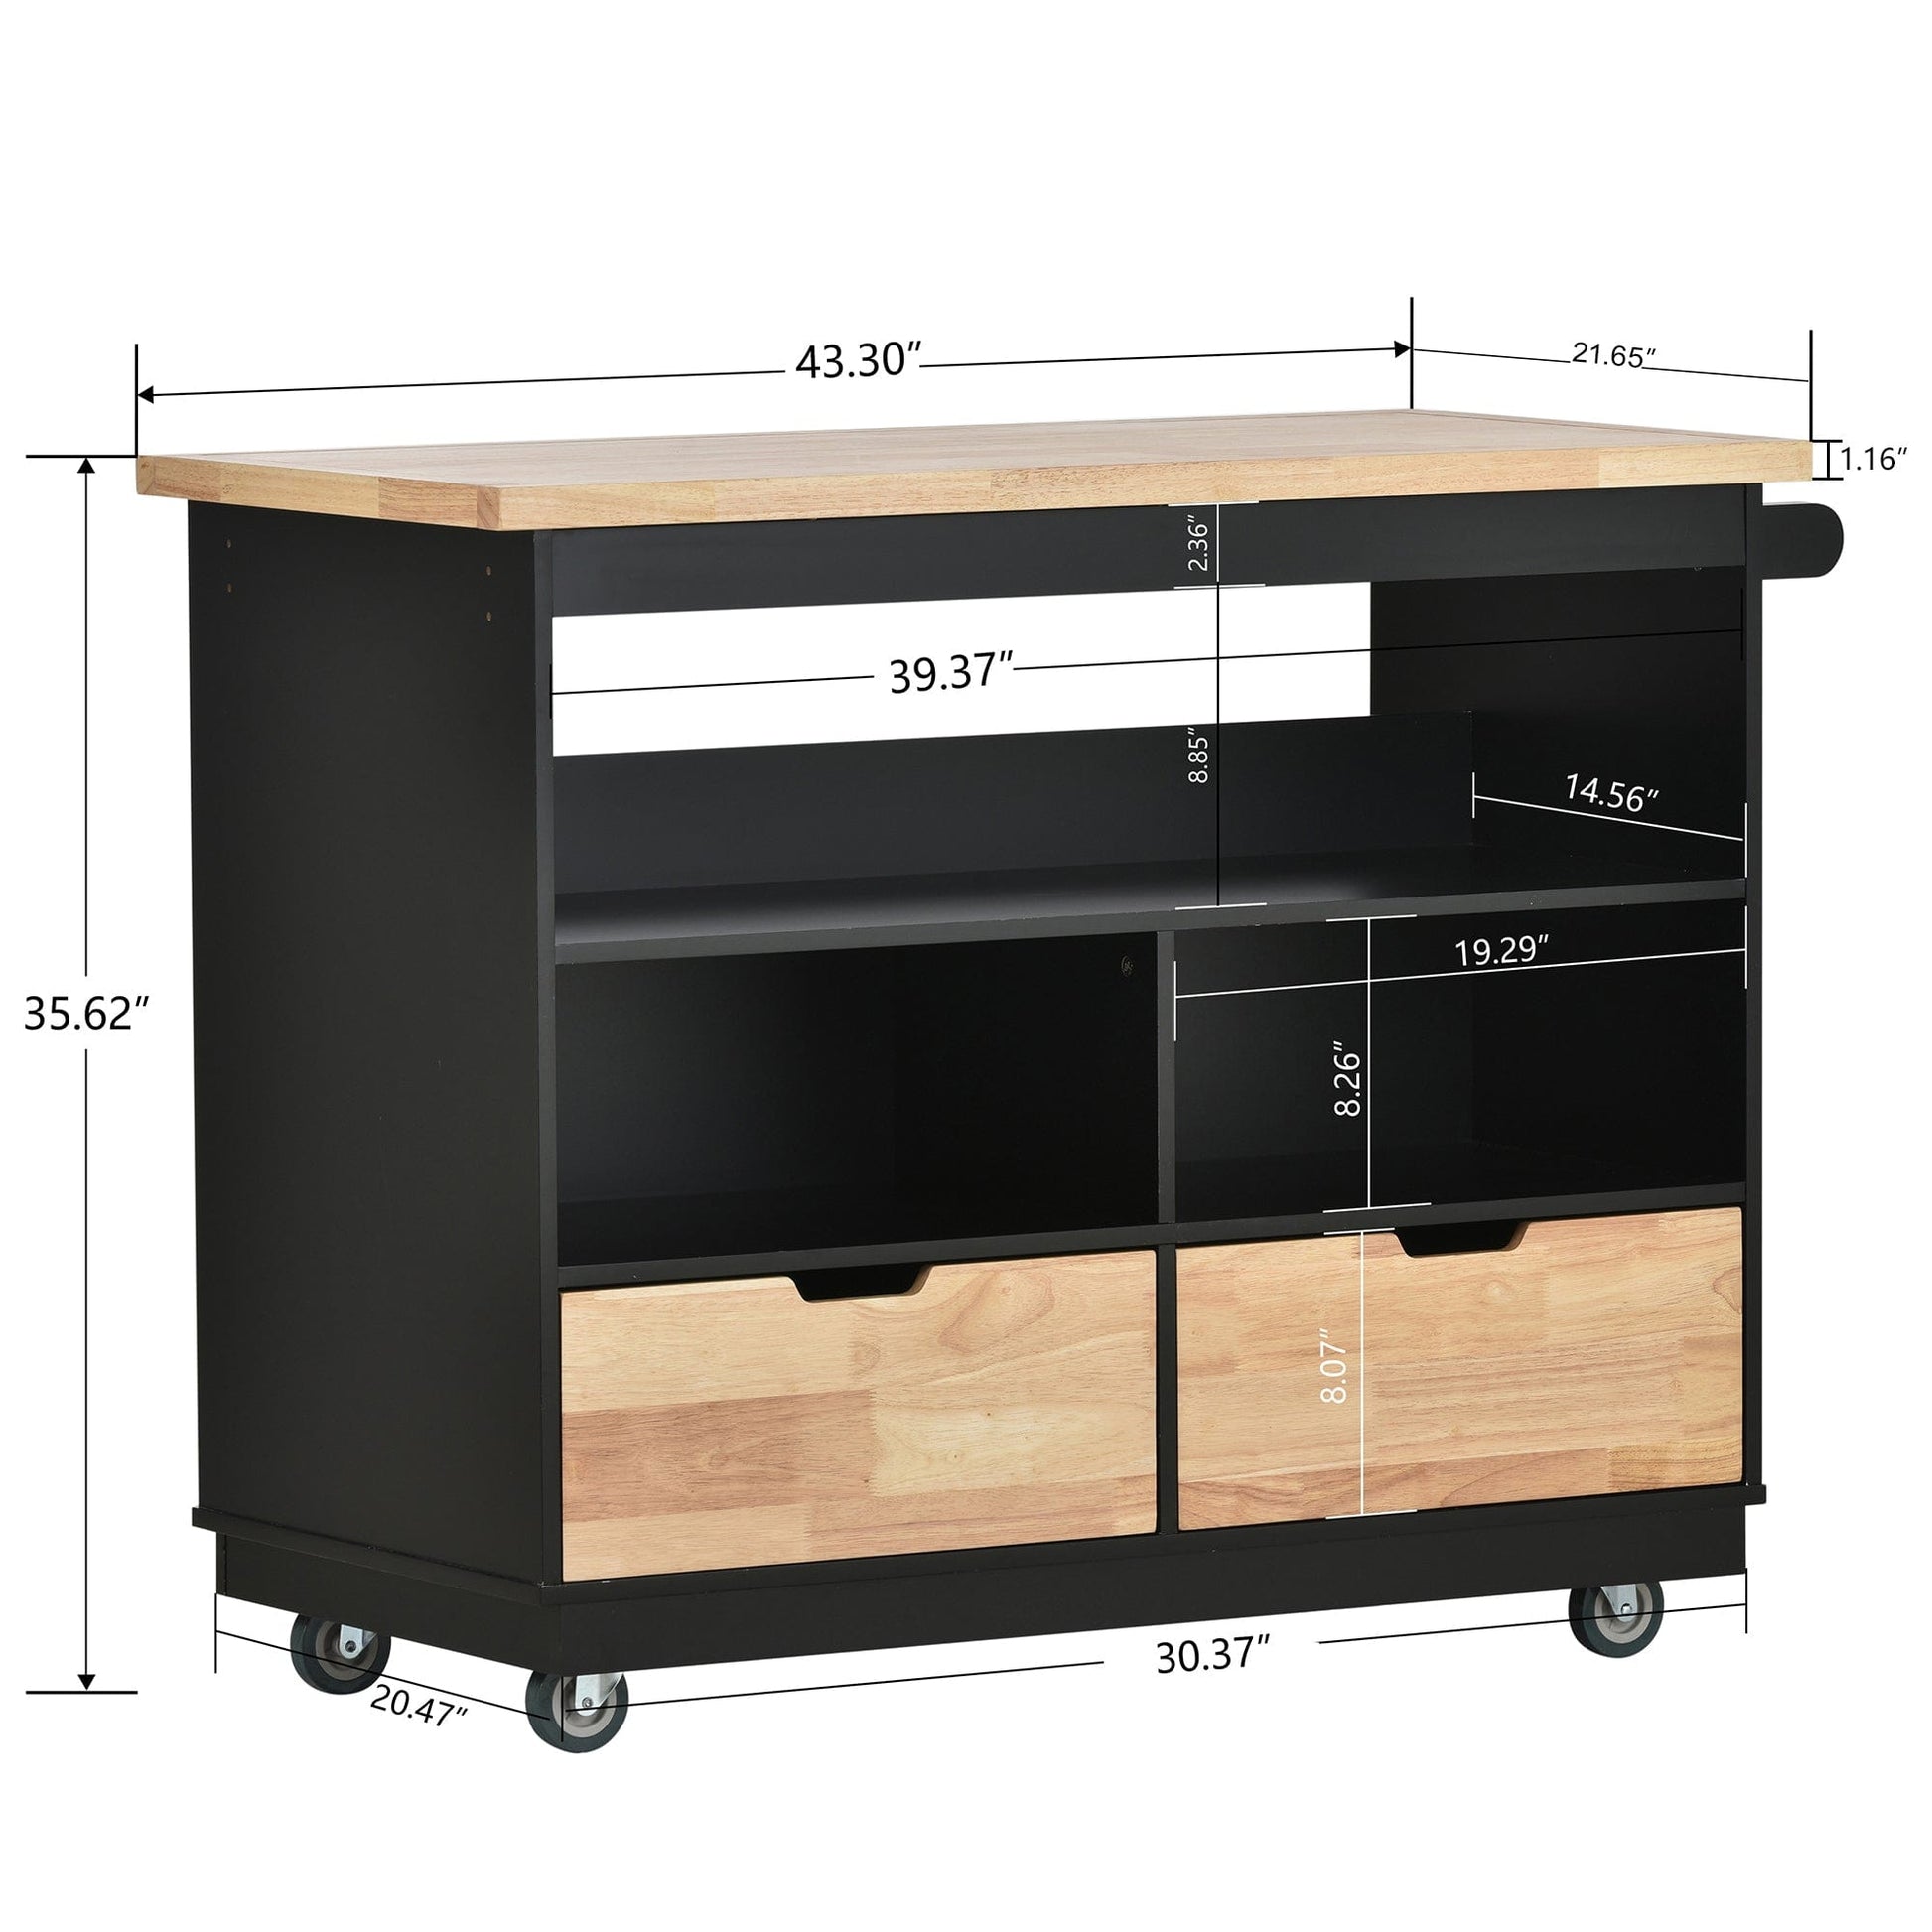 1st Choice Furniture Direct Kitchen Cart 1st Choice Versatile & Stylish Kitchen Cart Rolling Mobile Island - Black